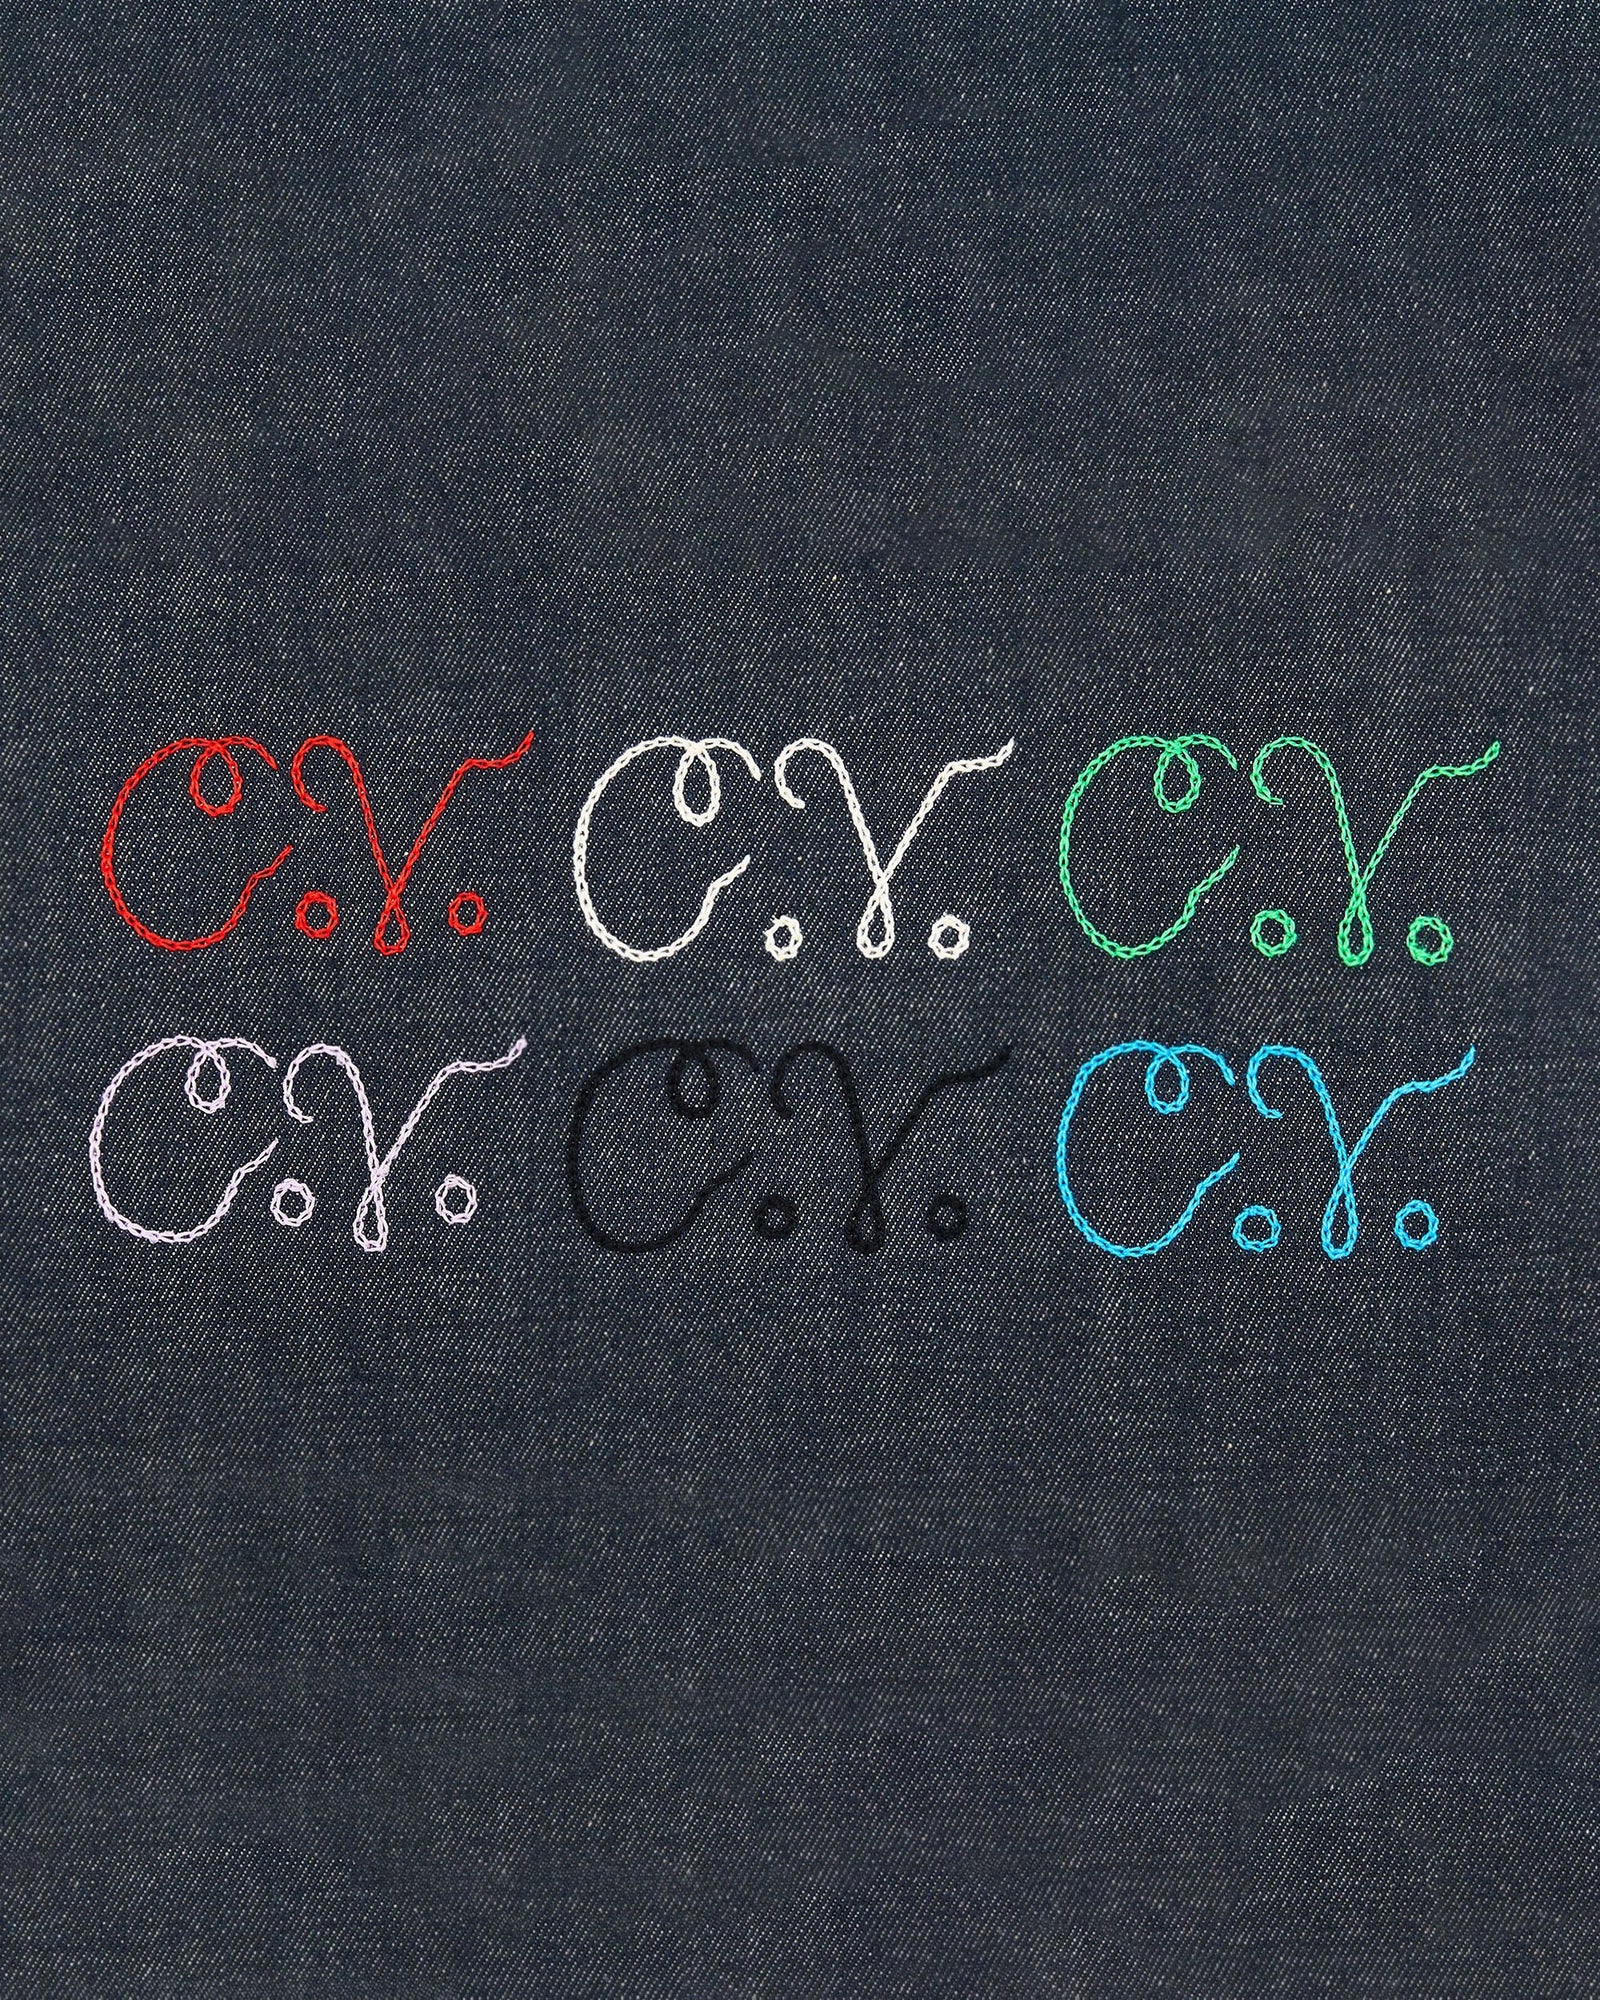 Cursive Font Embroidered Monogram Color Options